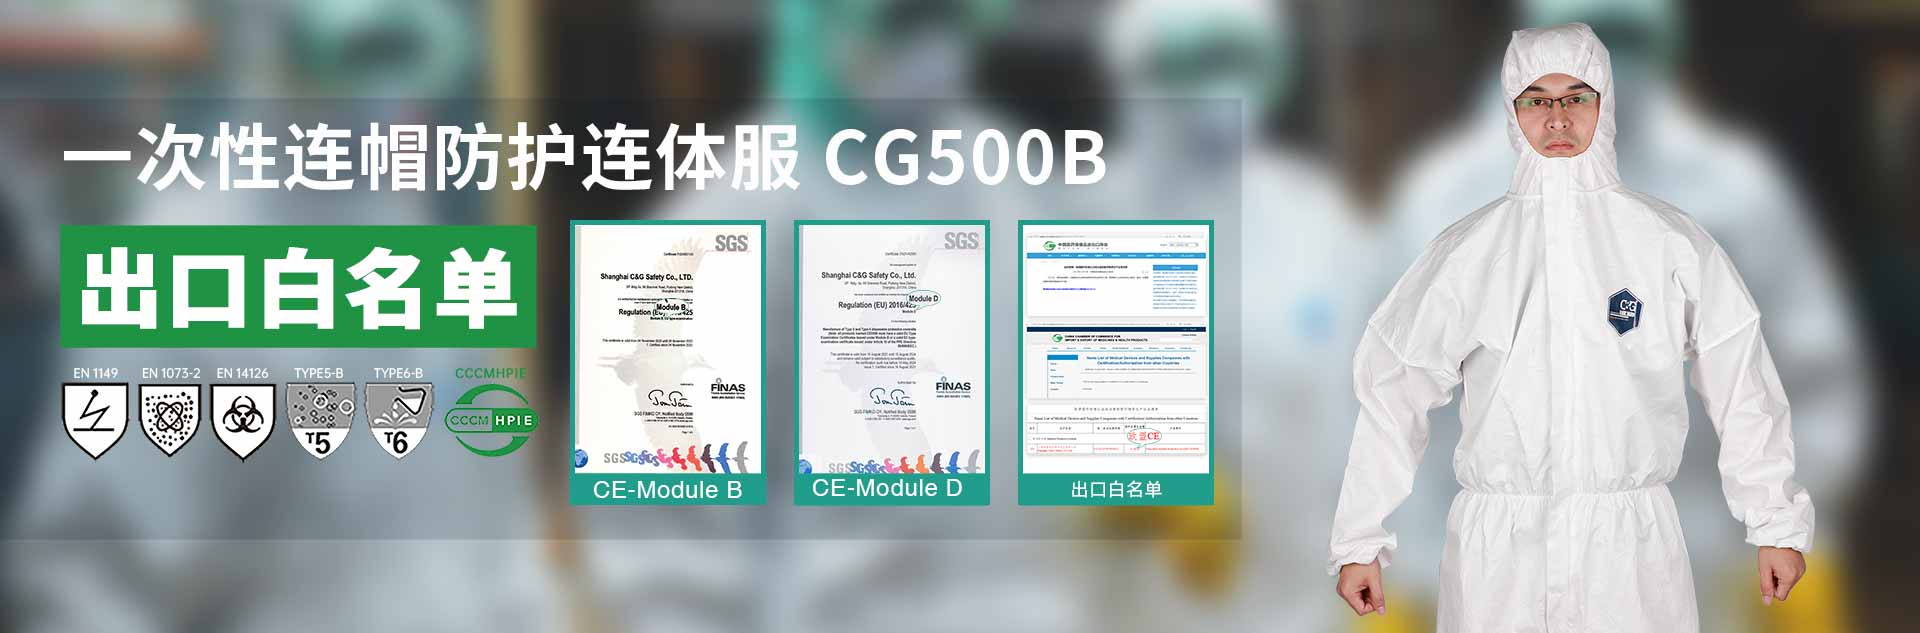 CG500B出口白名单